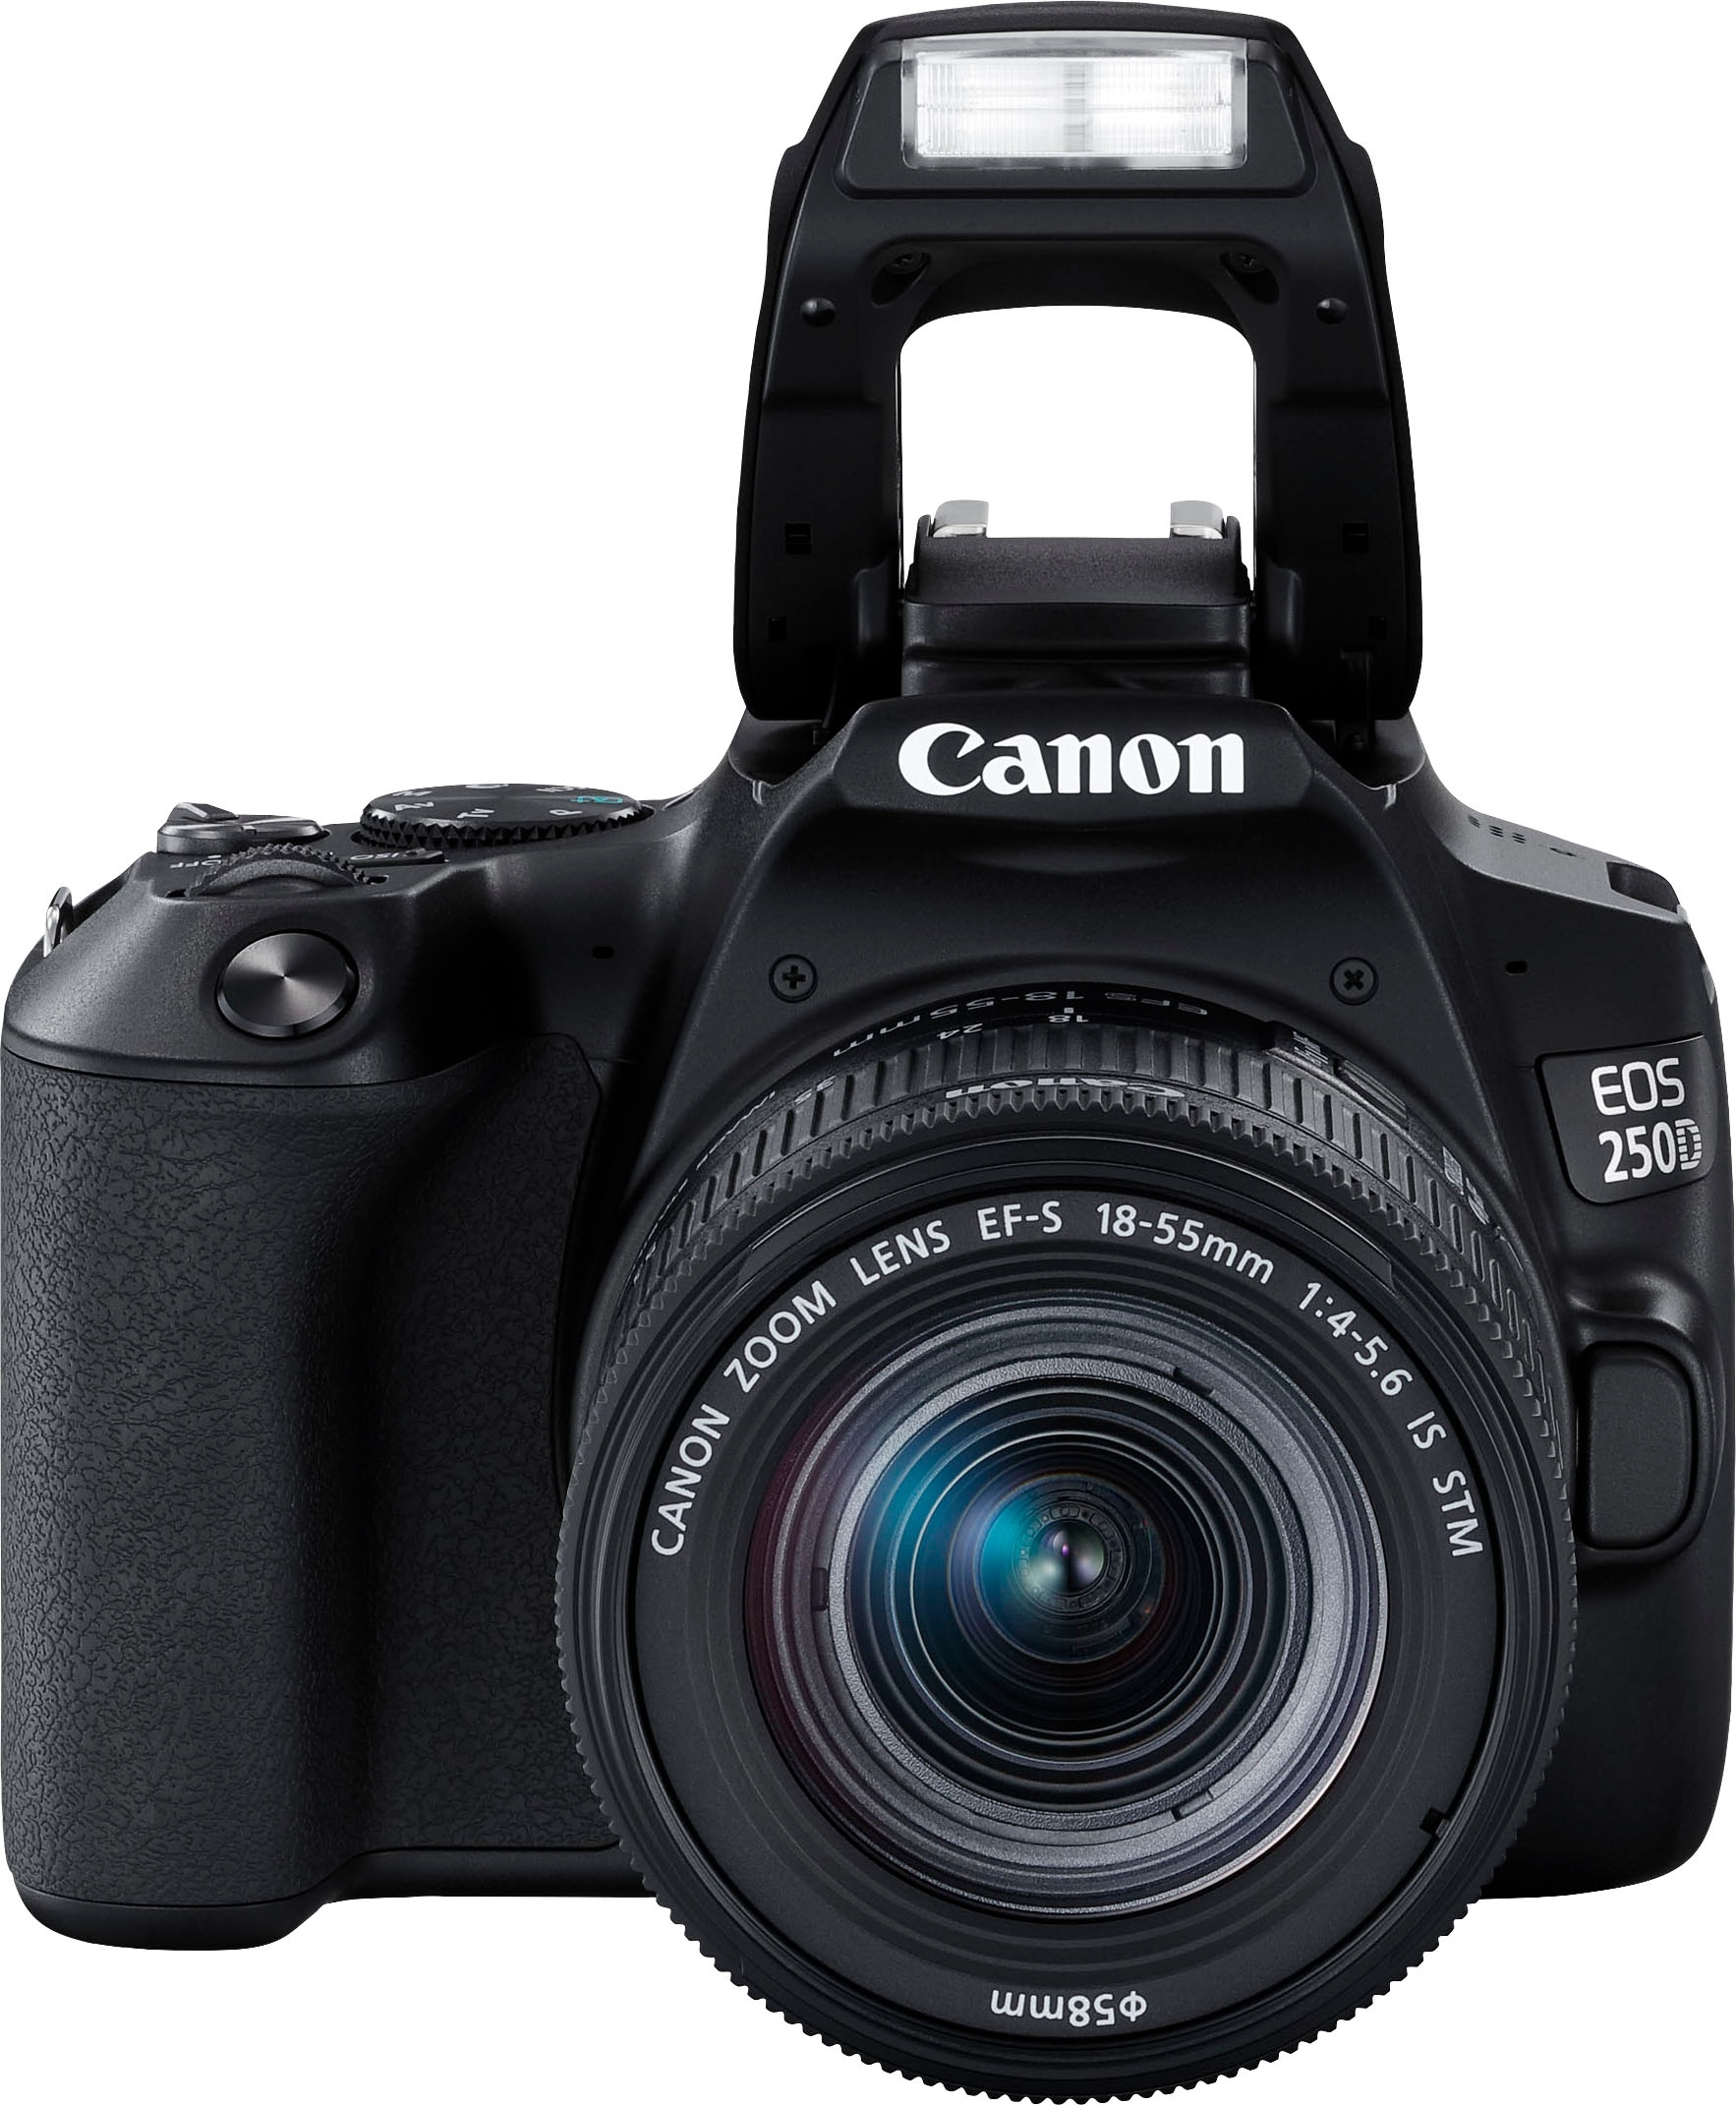 Canon Systemkamera »250D + f/3.5-5.6 18-55mm SB130 f/3.5-5.6 EF-S 18-55mm BAUR III 24,1 EF-S III, Kit«, Bluetooth-WLAN MP, + 